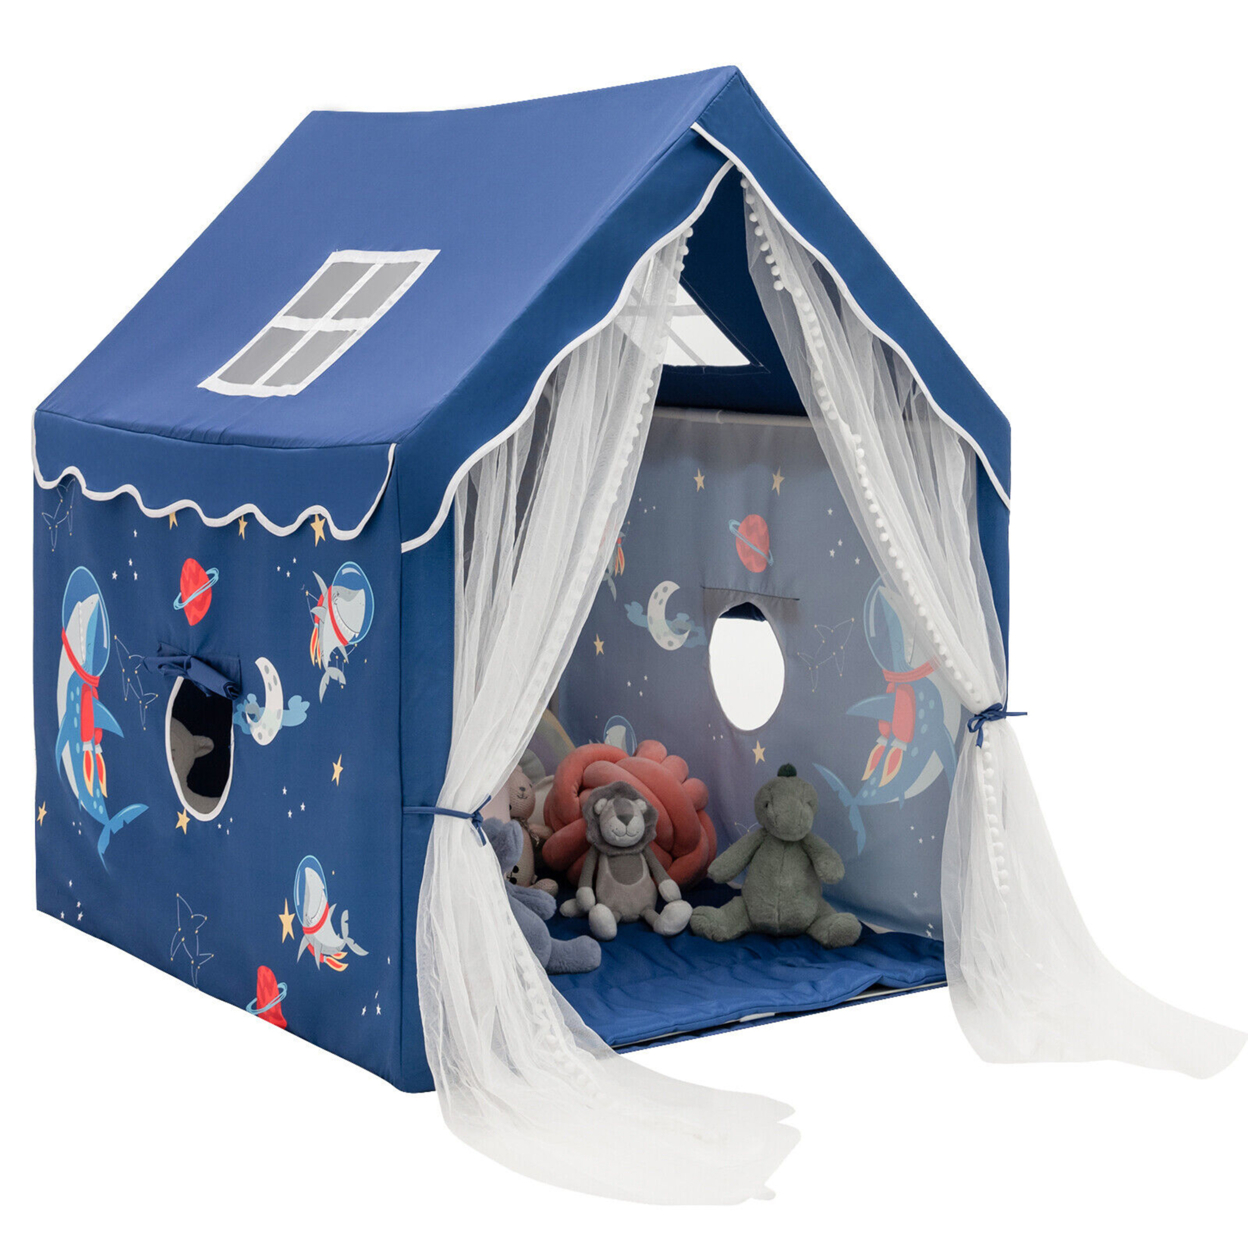 Kids Playhouse Large Children Indoor Play Tent Gift W/ Cotton Mat Longer Curtain - Blue